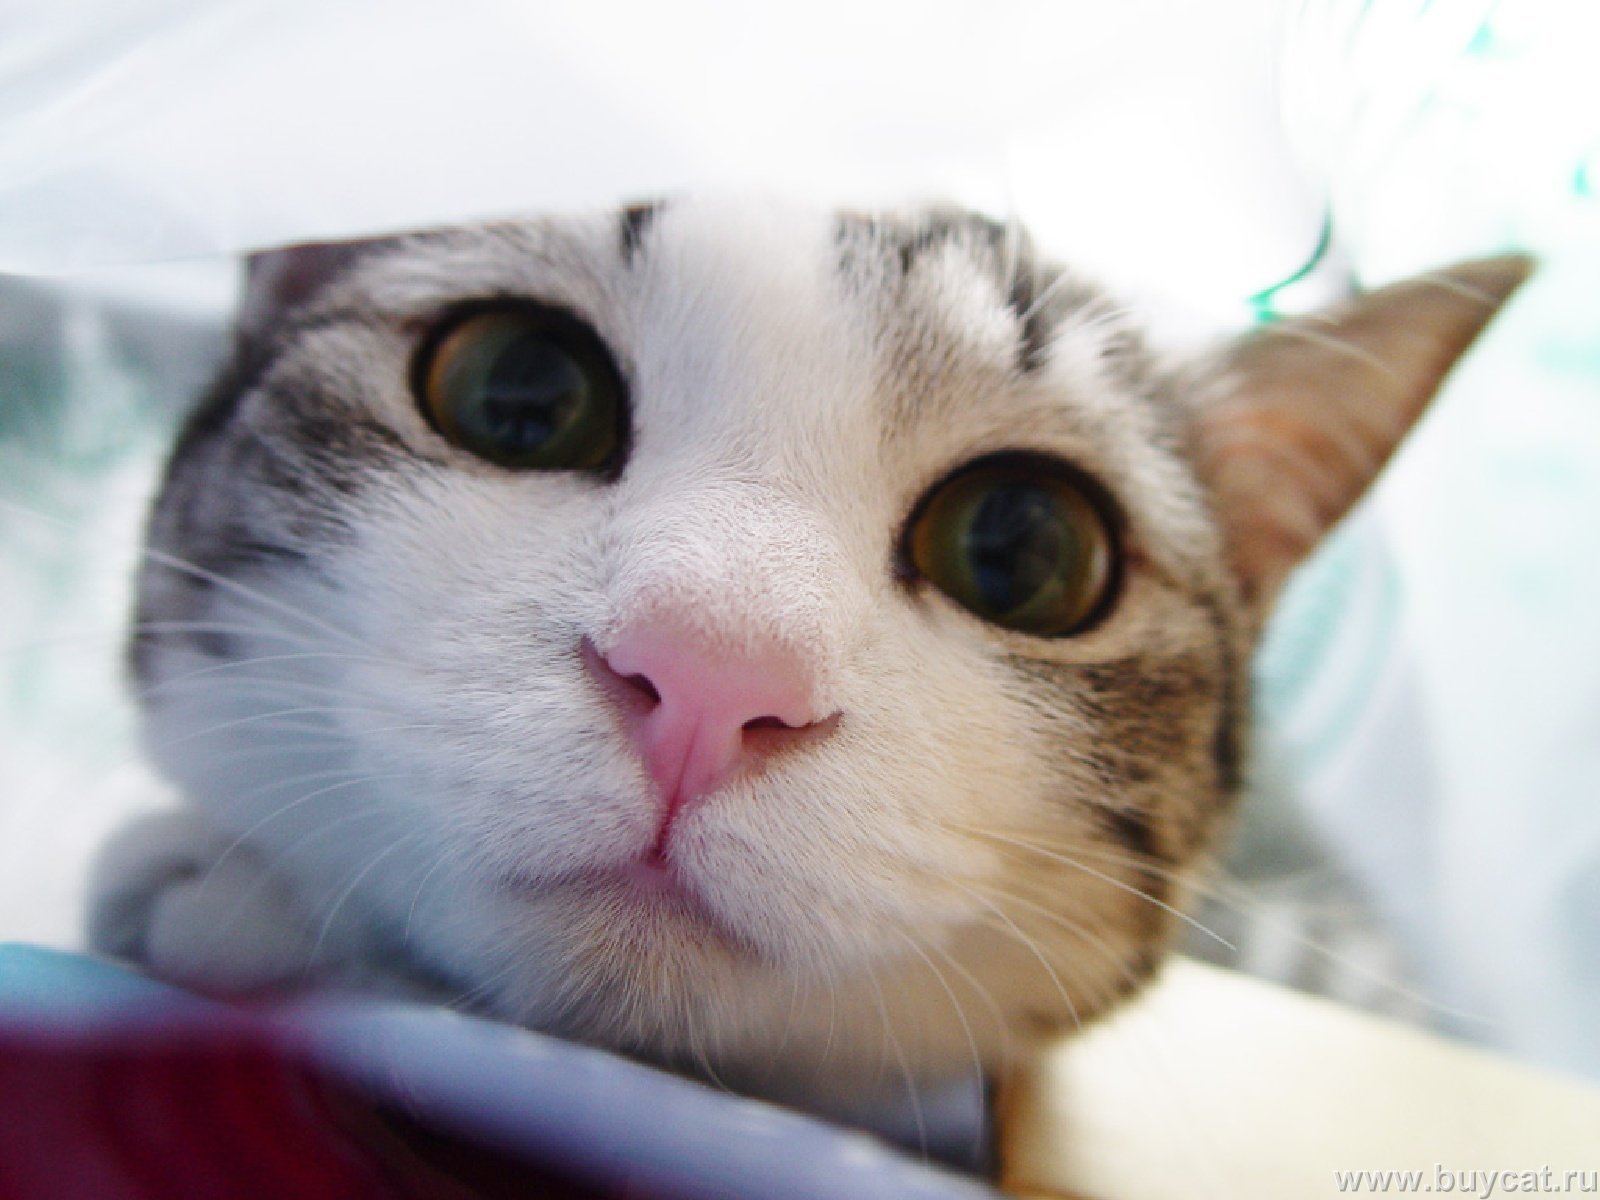 Kucing cute gambar Wallpaper Gambar